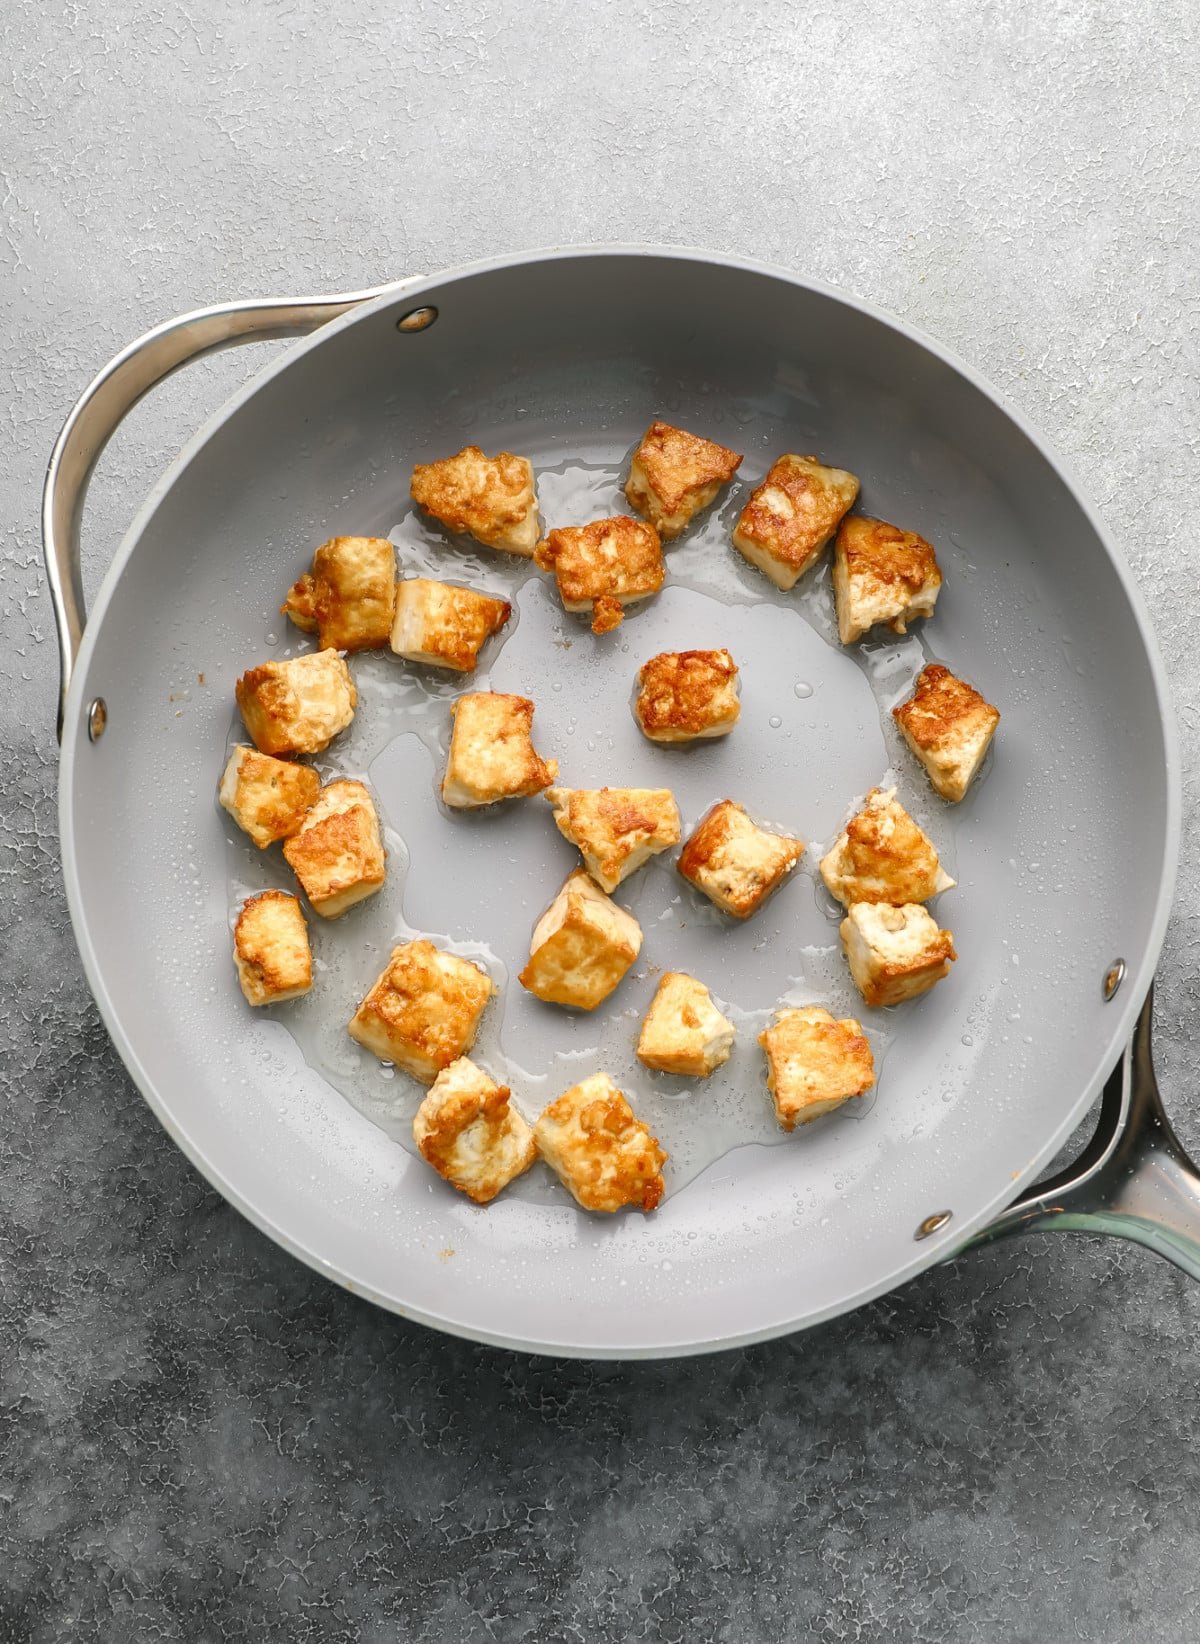 fried tofu in a grey pan